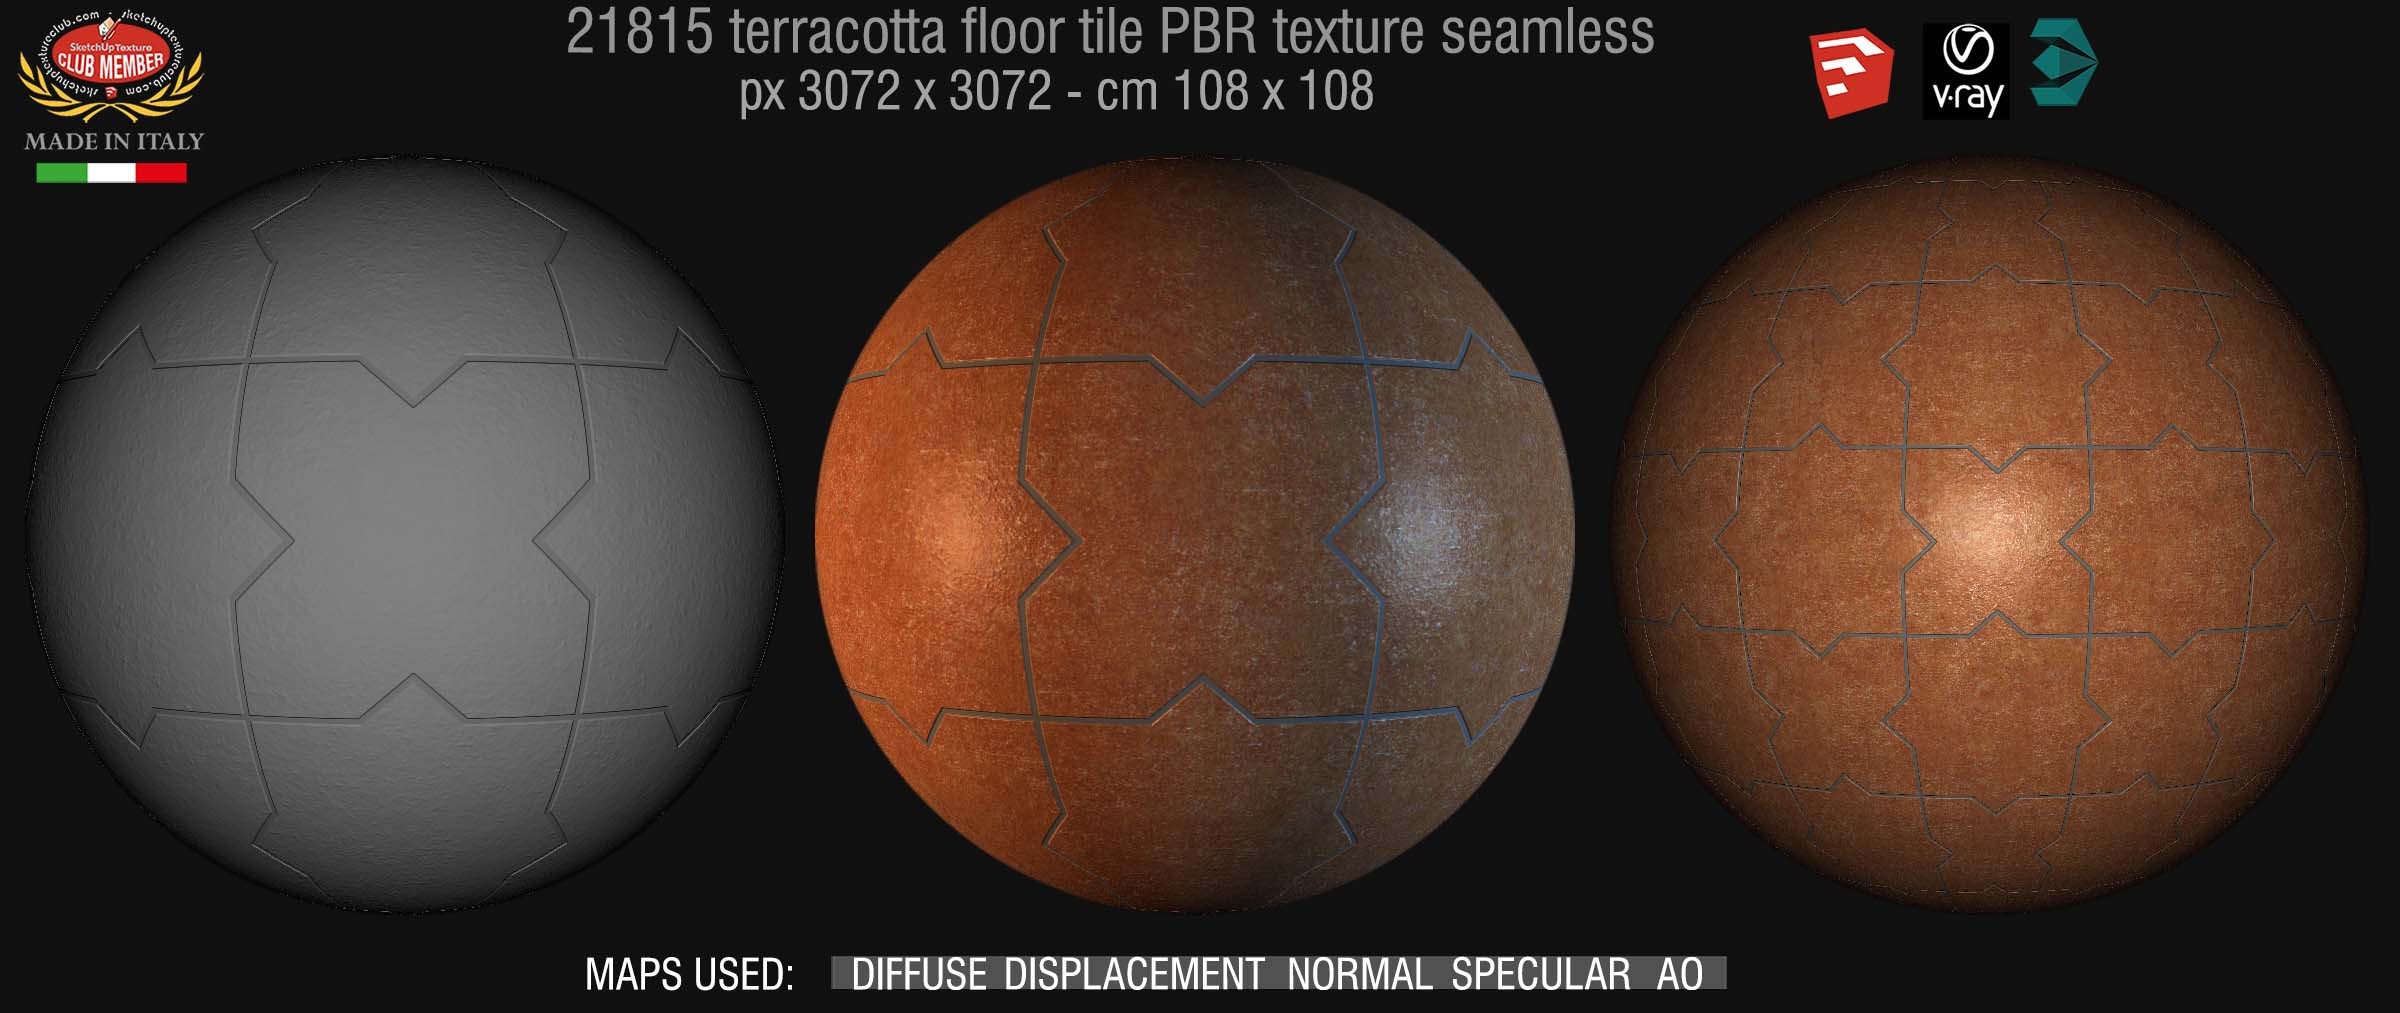 21815 terracotta floor tile PBR texture seamless DEMO